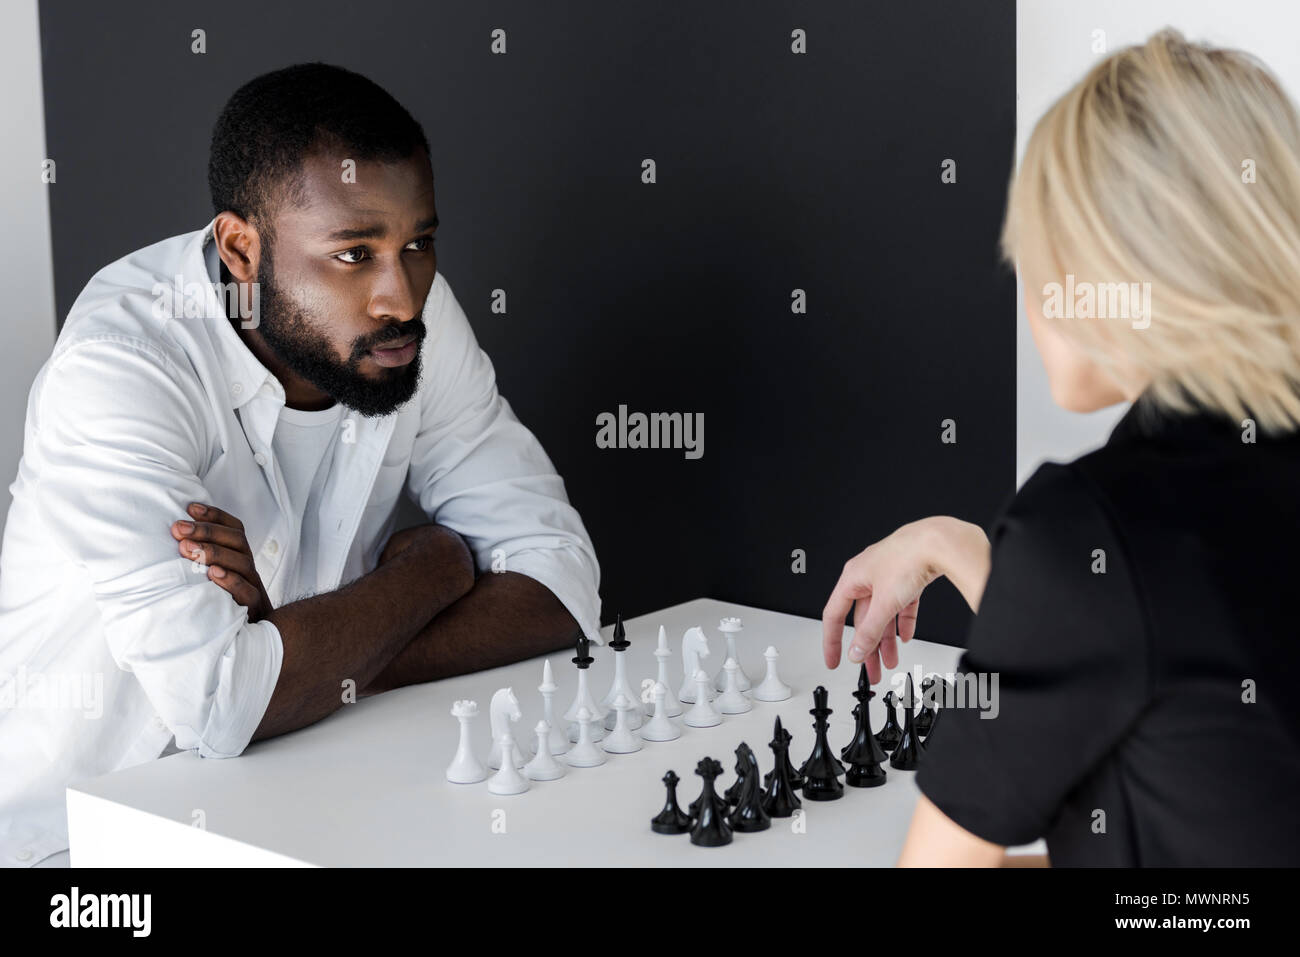 Senior man planning his next chess move, Stock image